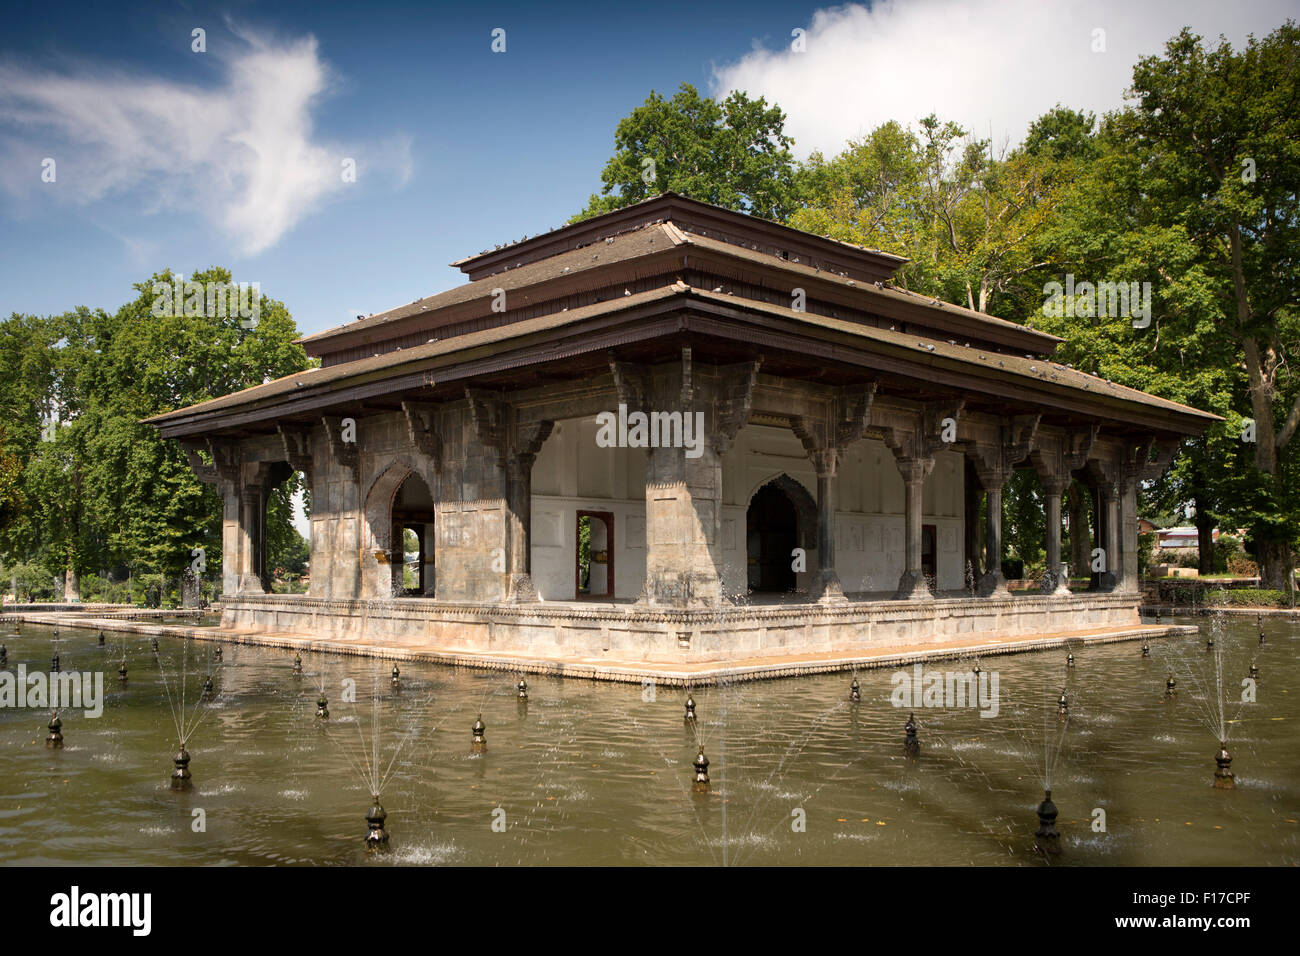 India, Jammu & Kashmir, Srinagar, Shalimar Bagh, Mughal Garden built by Emperor Jehangir, Marble Pavilion Stock Photo